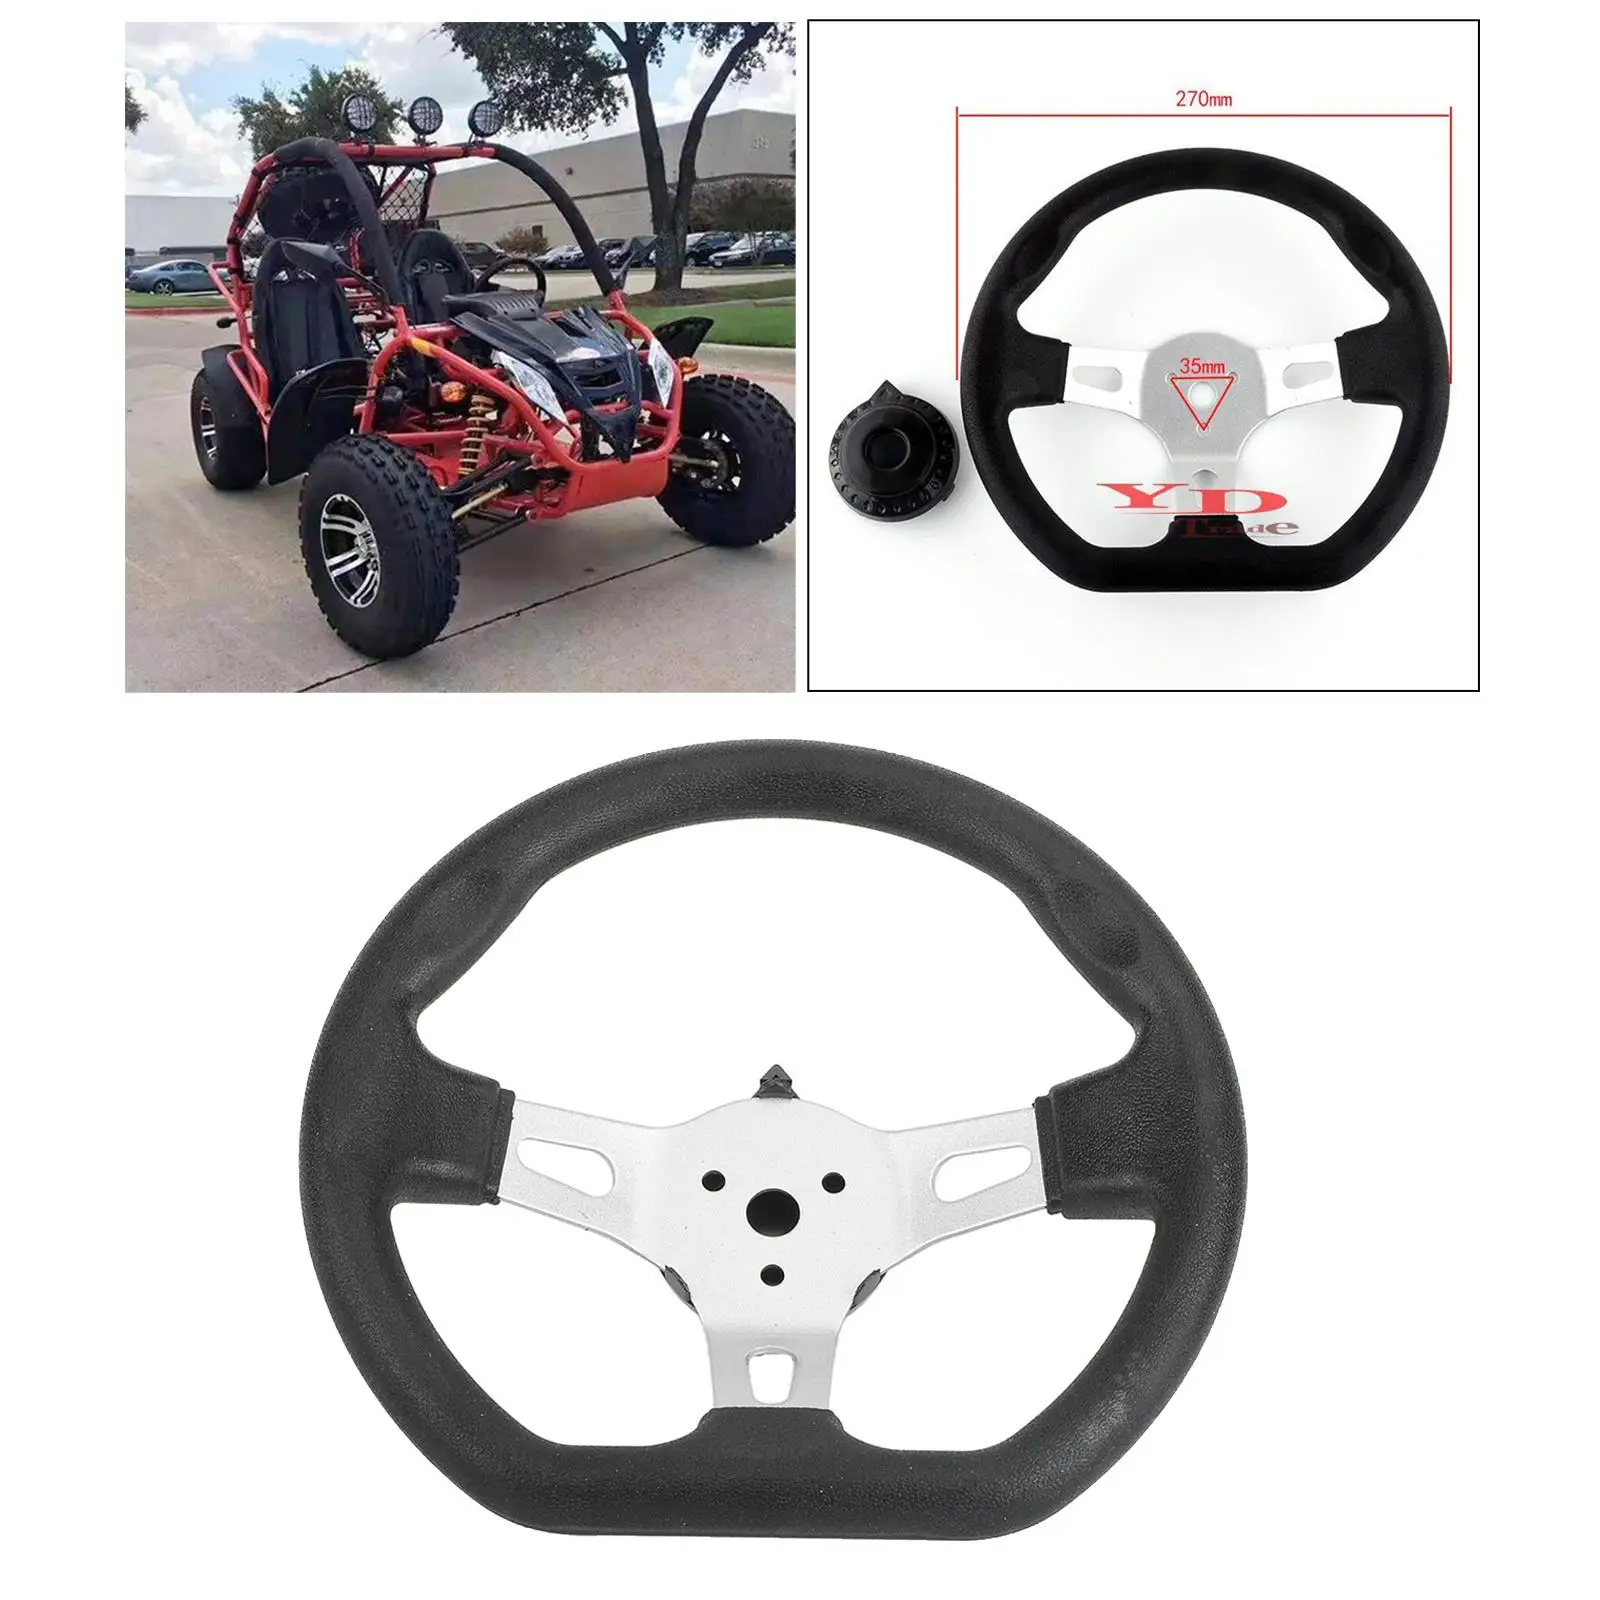 270mm  Steering Wheel Kart Parts Go-Kart   Cart Accessory